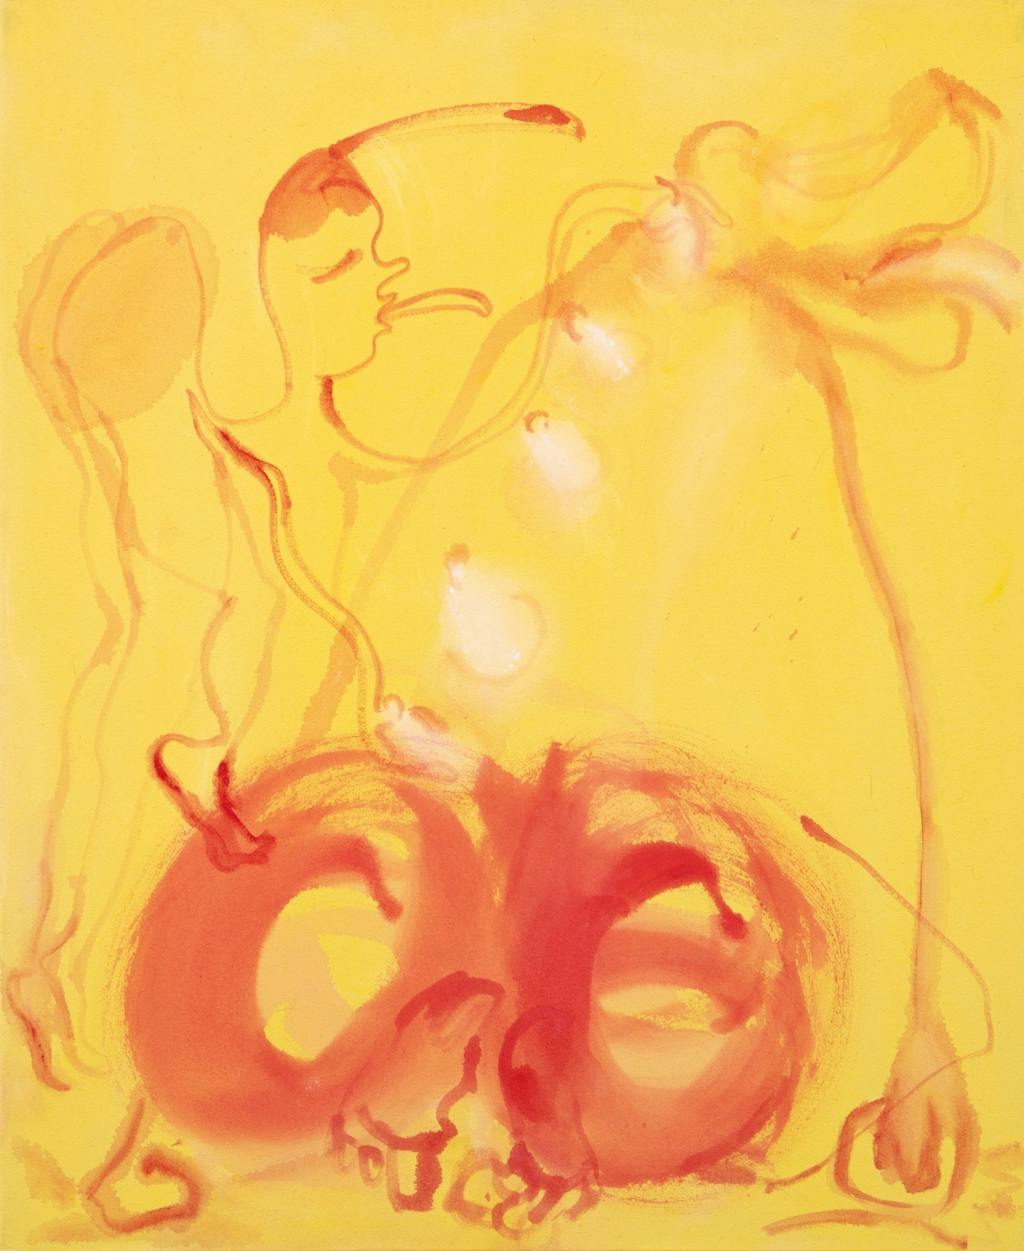 Andrea Éva Győri, Tongue with Transparent Body, 2019, ink and gouache on canvas, 110 x 90 cm. Photo: Robert Glas - © Photo: Robert Glas, Paris Internationale